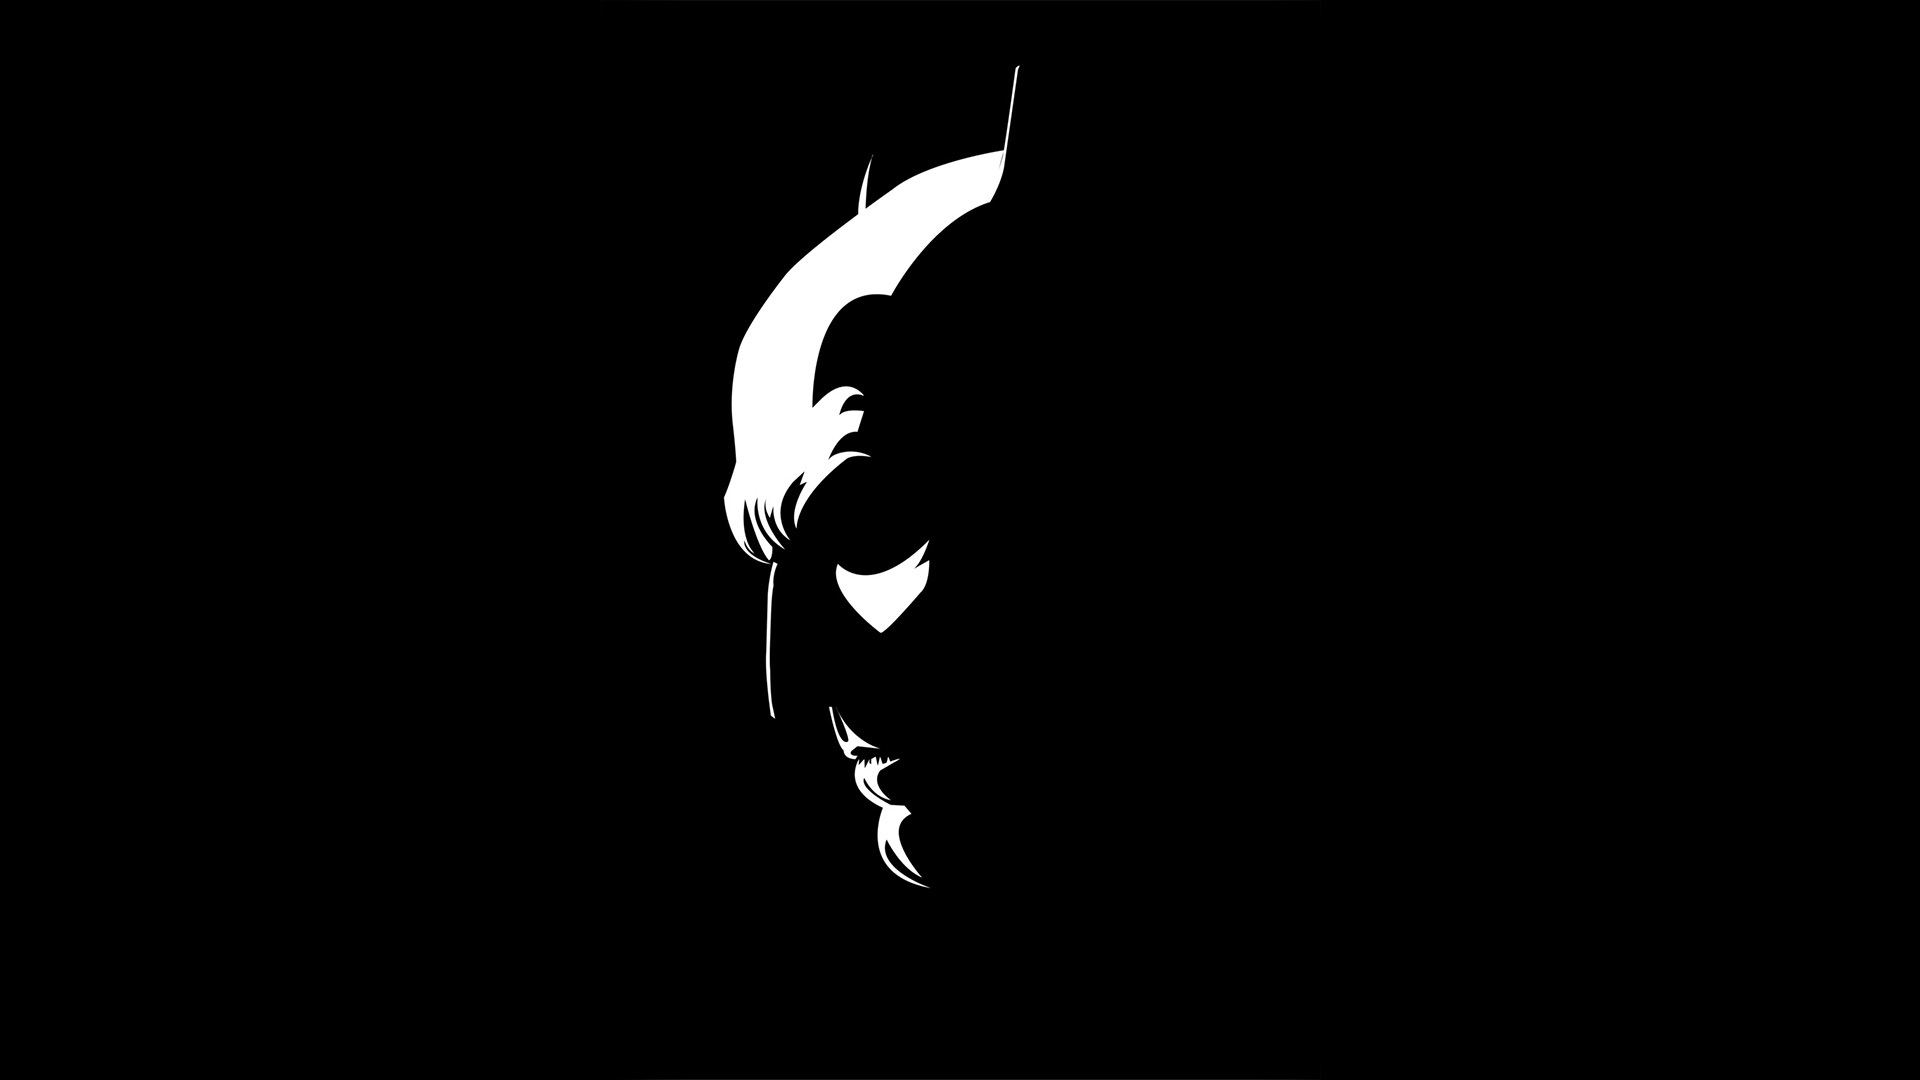 Batman Black and White Background Wallpaper